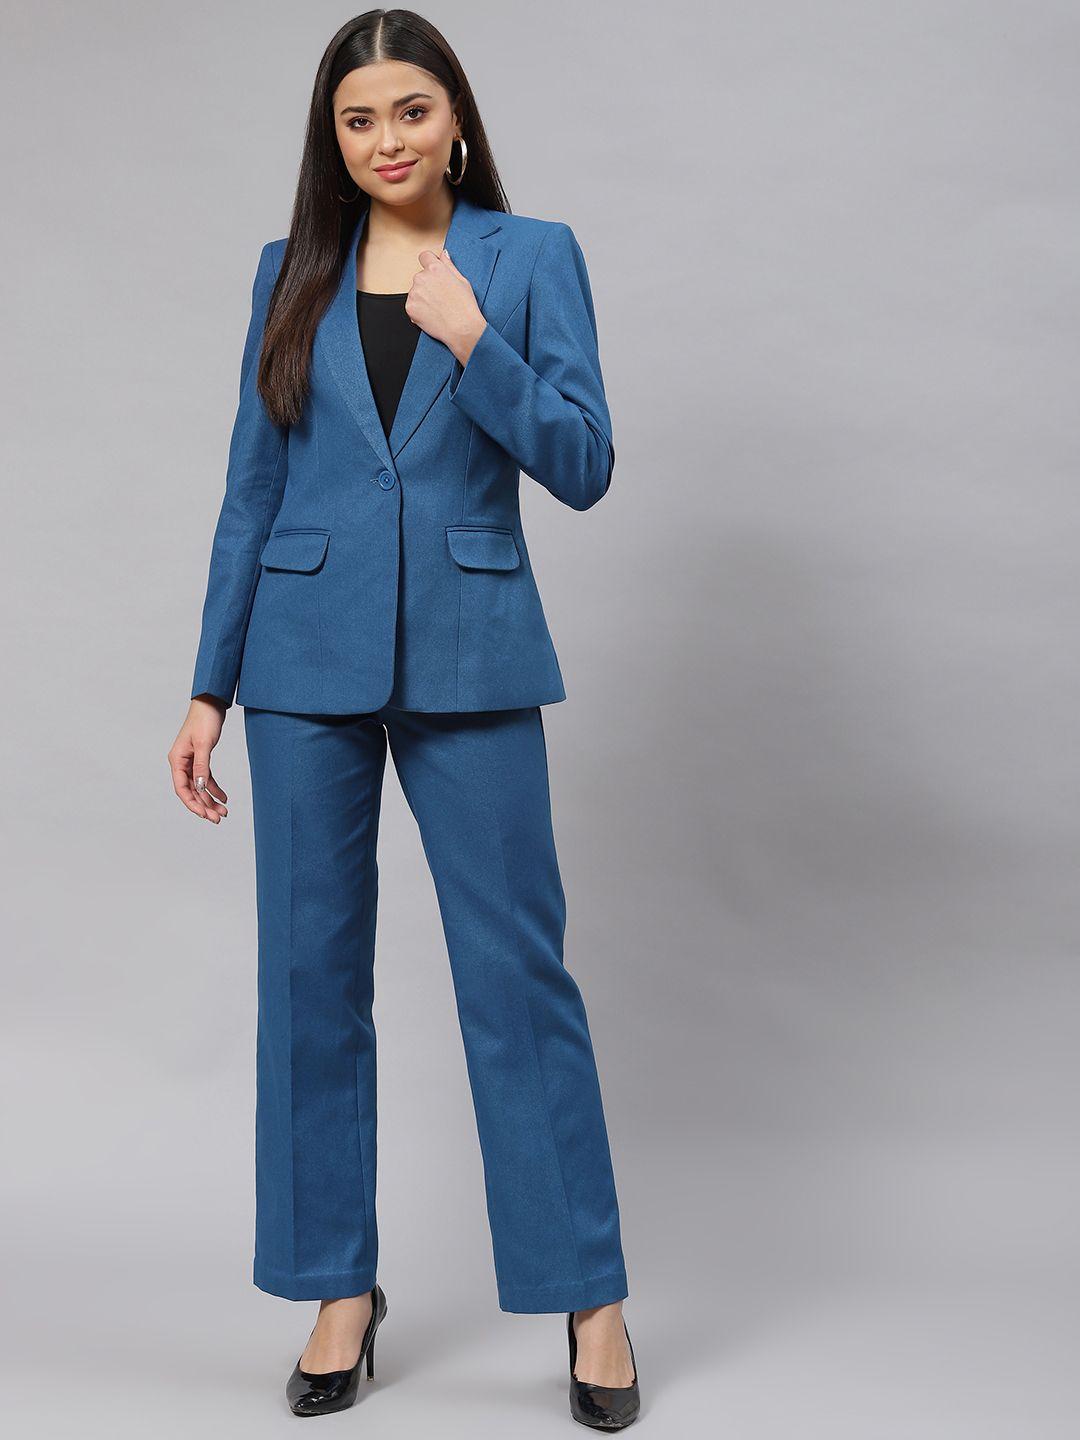 powersutra women teal blue solid blazer & trousers set